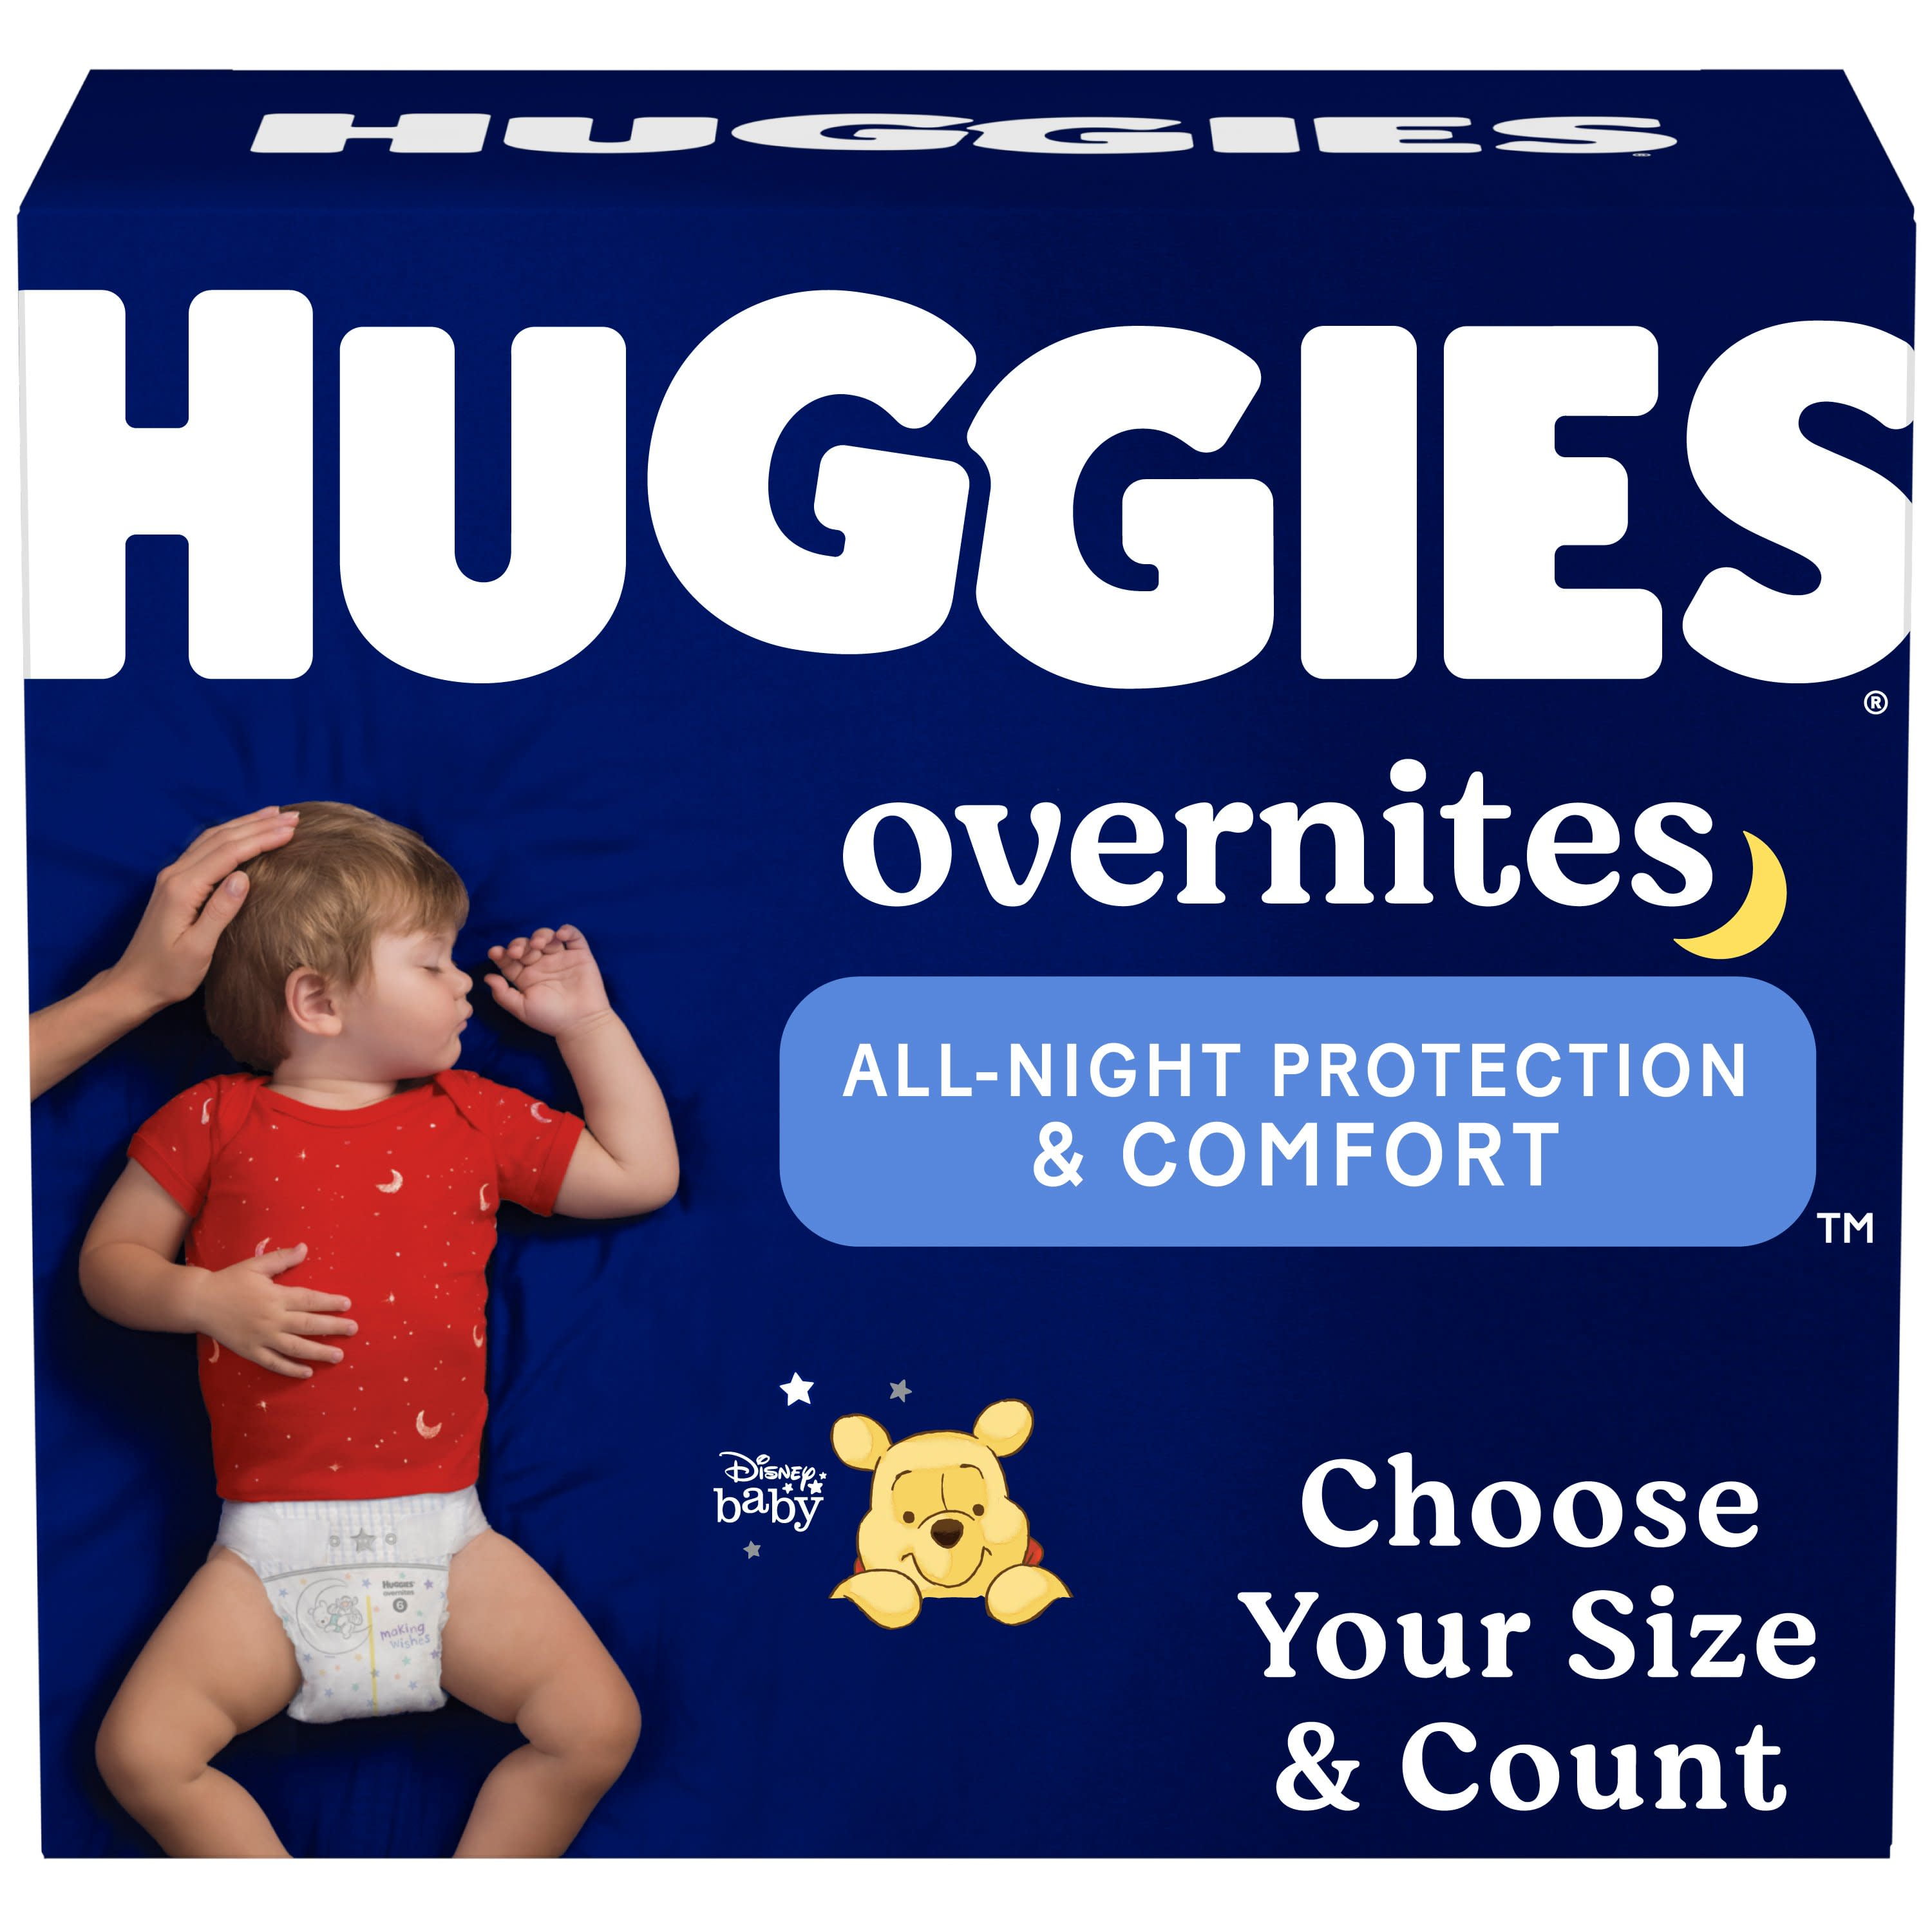 huggies 58